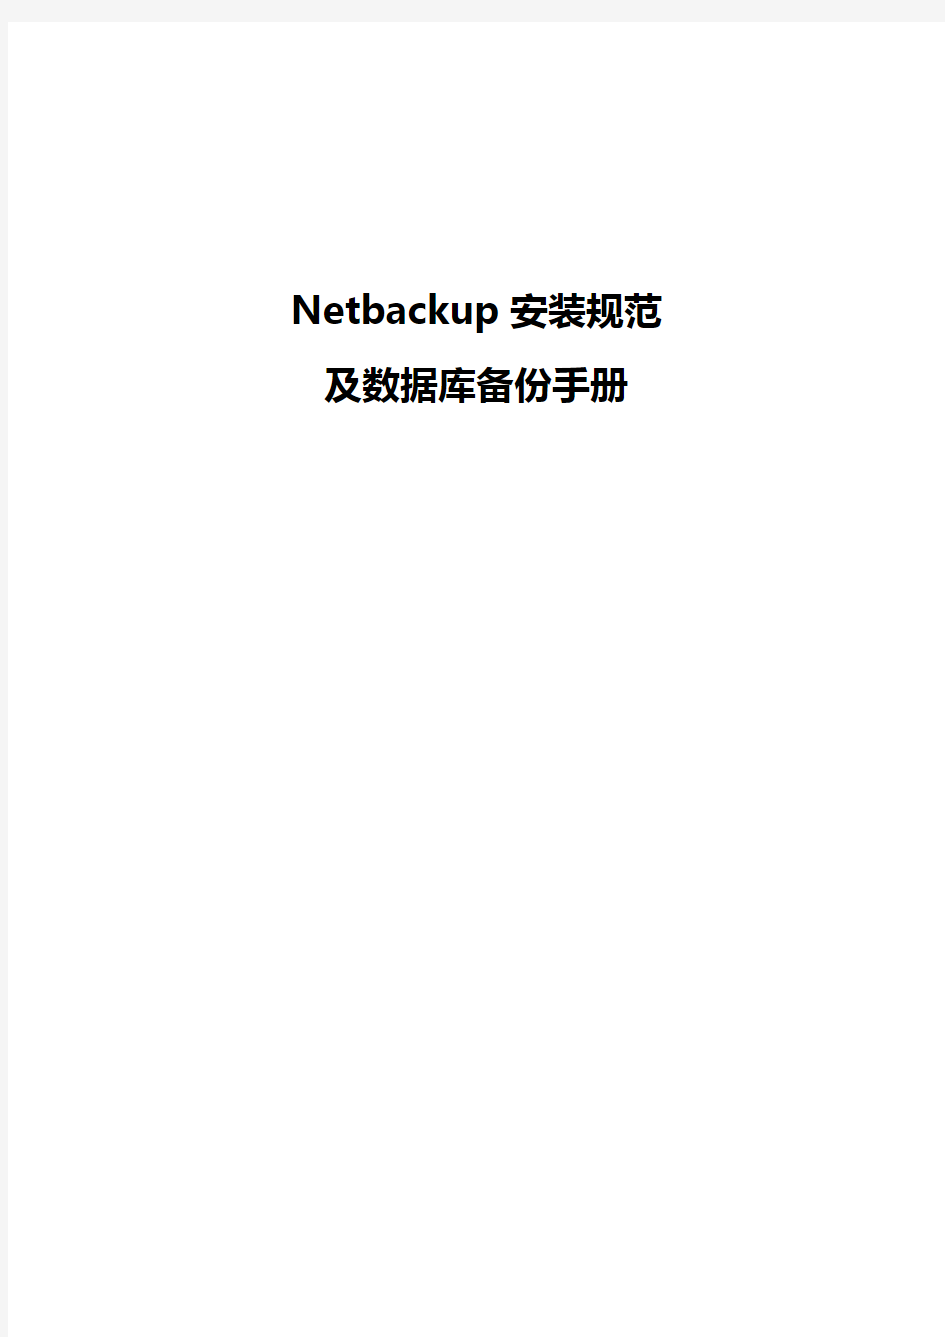 Netbackup安装规范-及数据库备份手册